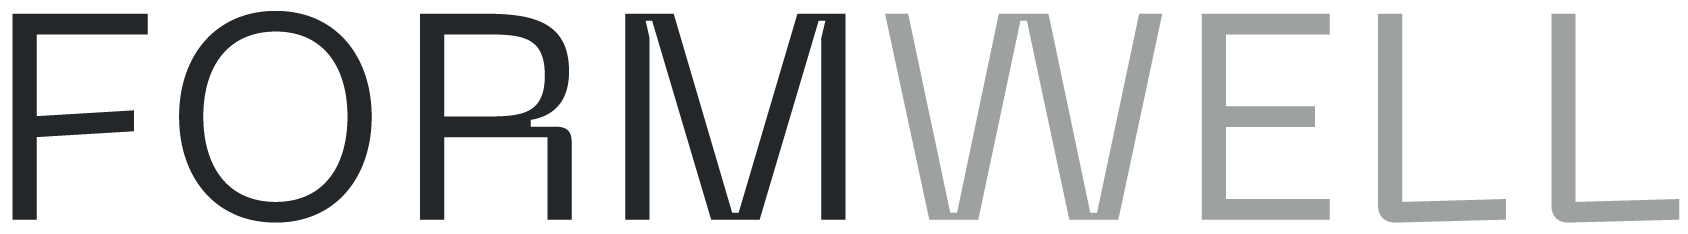 Sponsor logo: Formwell